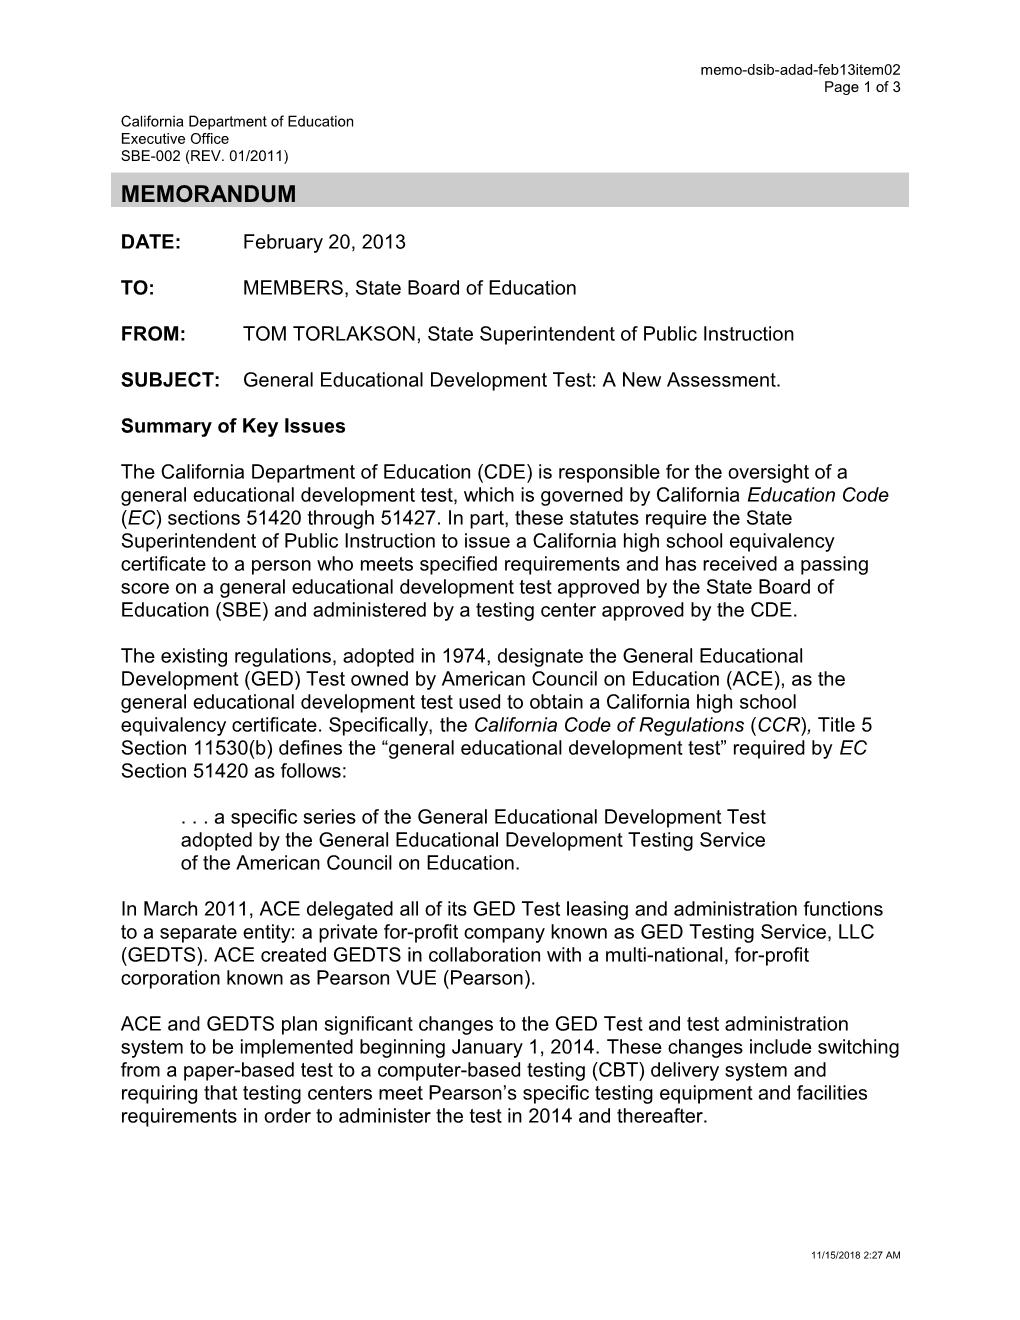 February 2013 Memorandum ADAD Item 2 - Information Memorandum (CA State Board of Education)